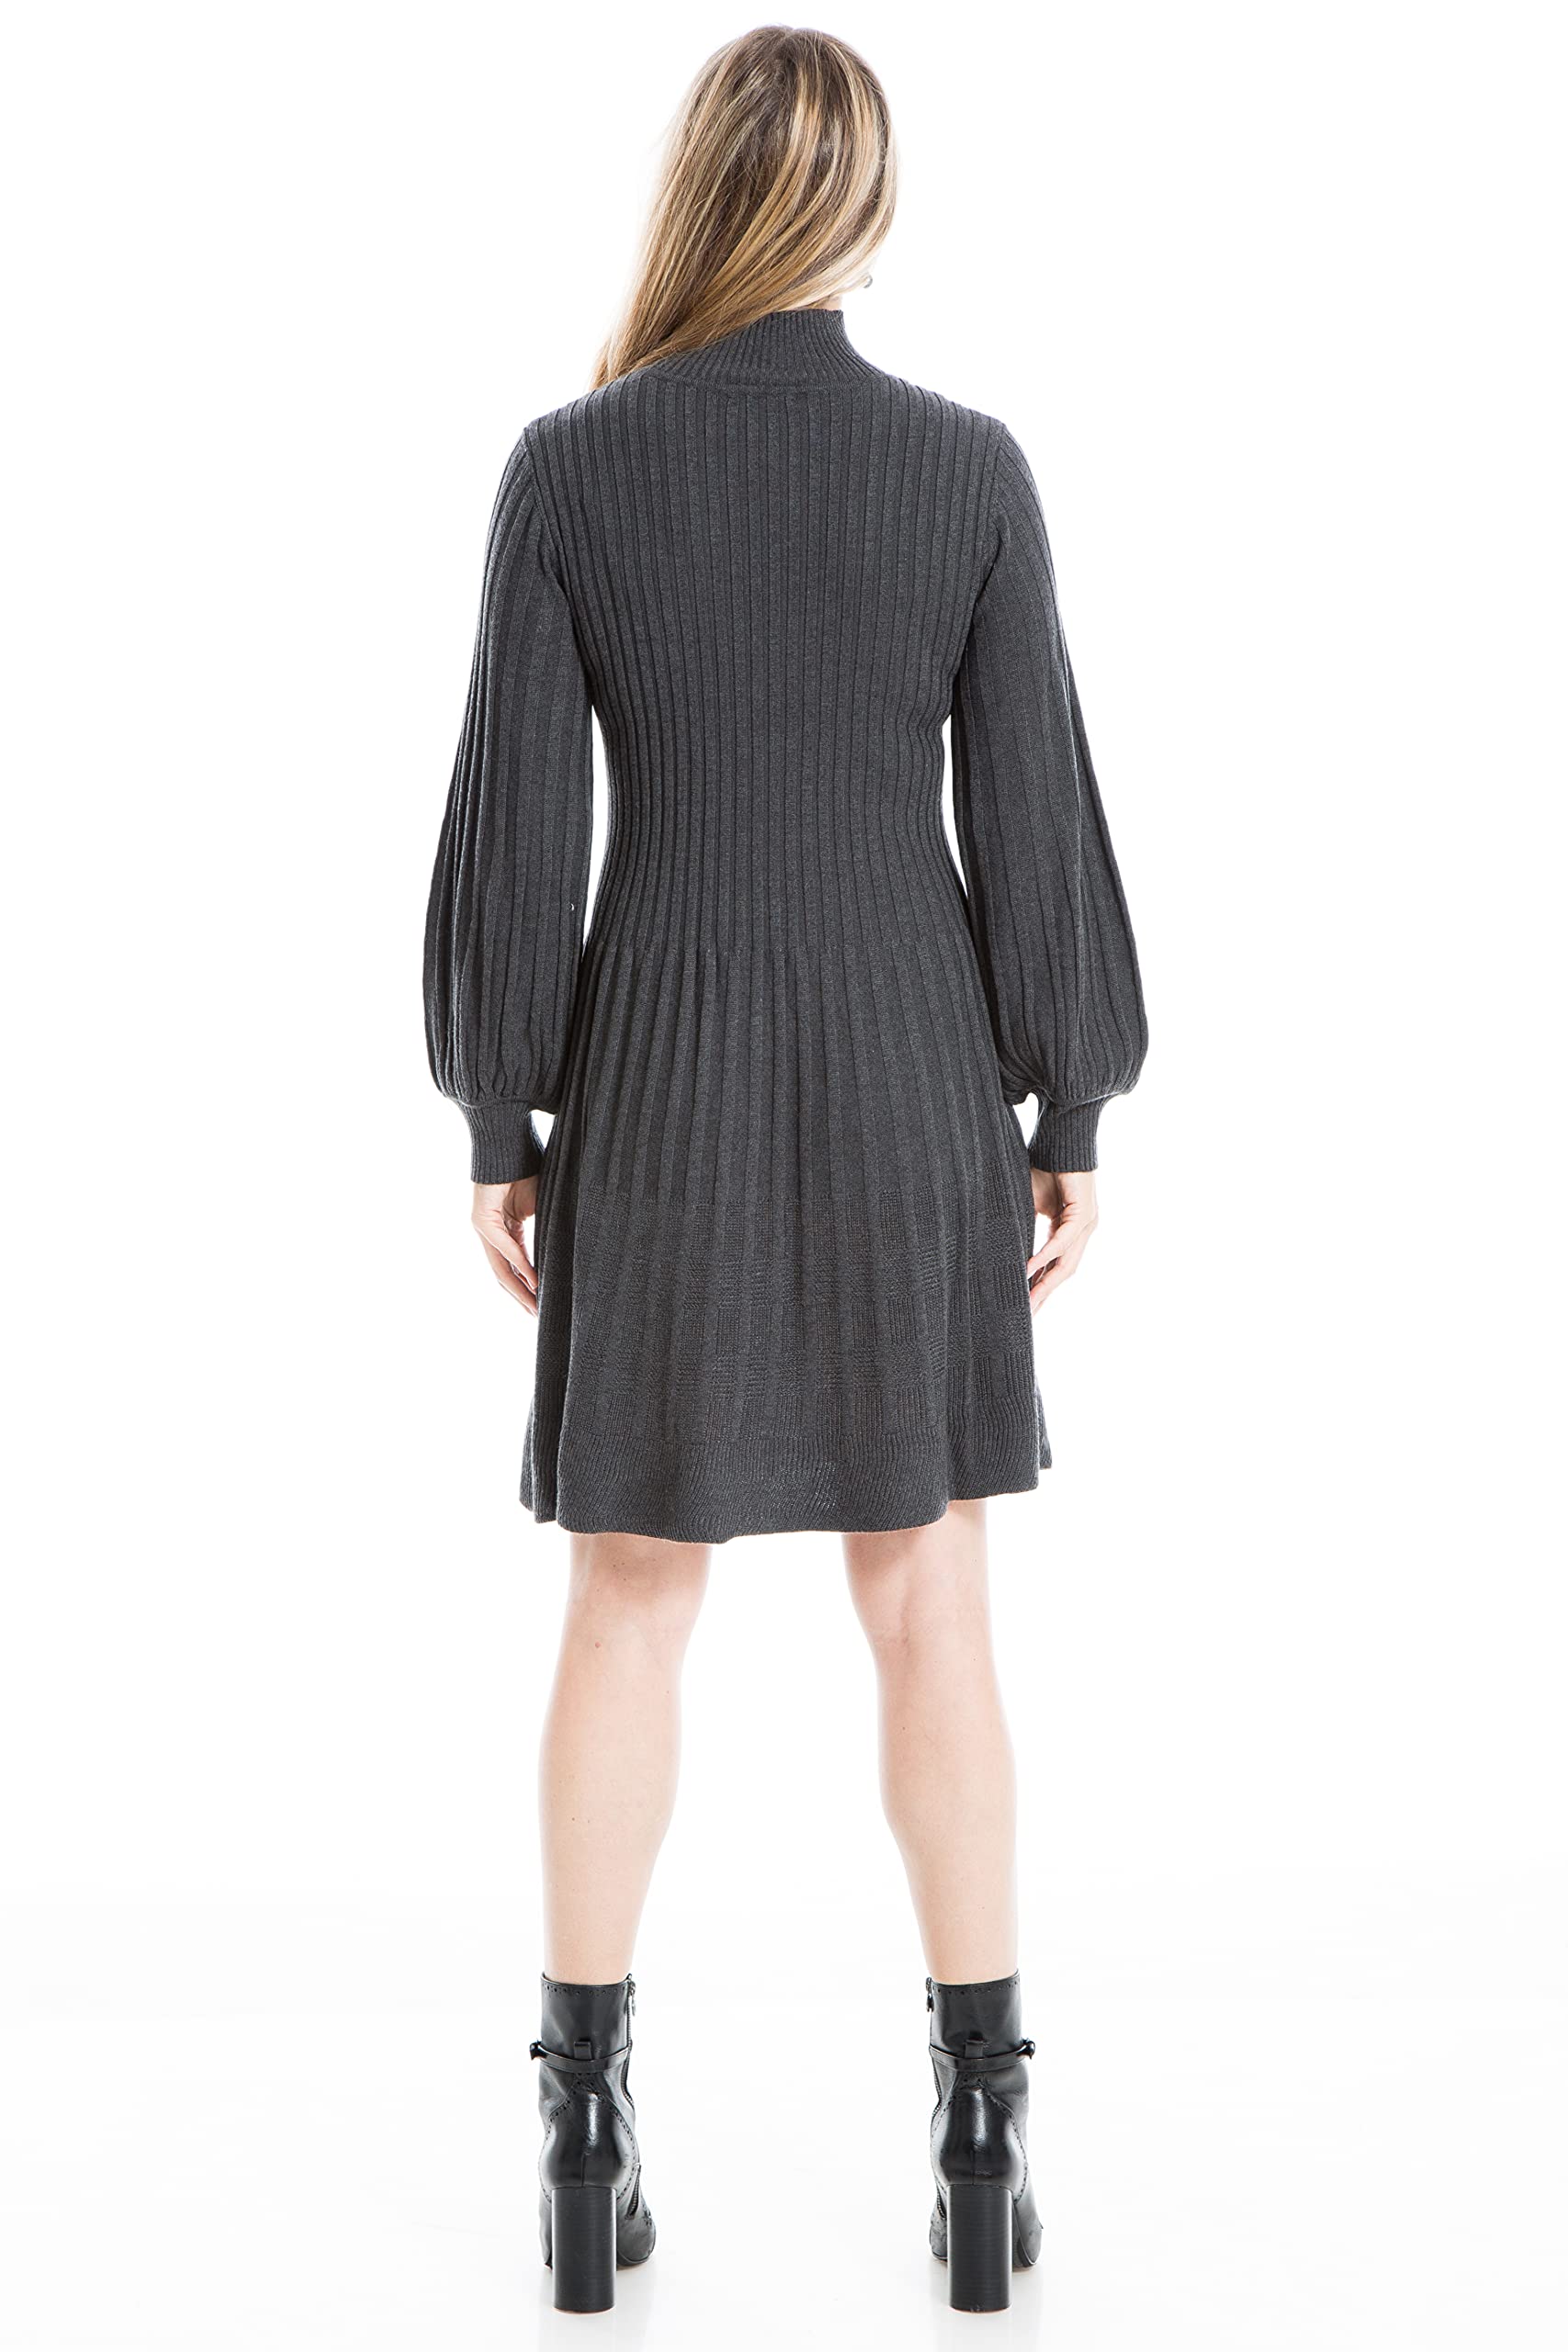 Max Studio Women's Long A-line Sweater Dress